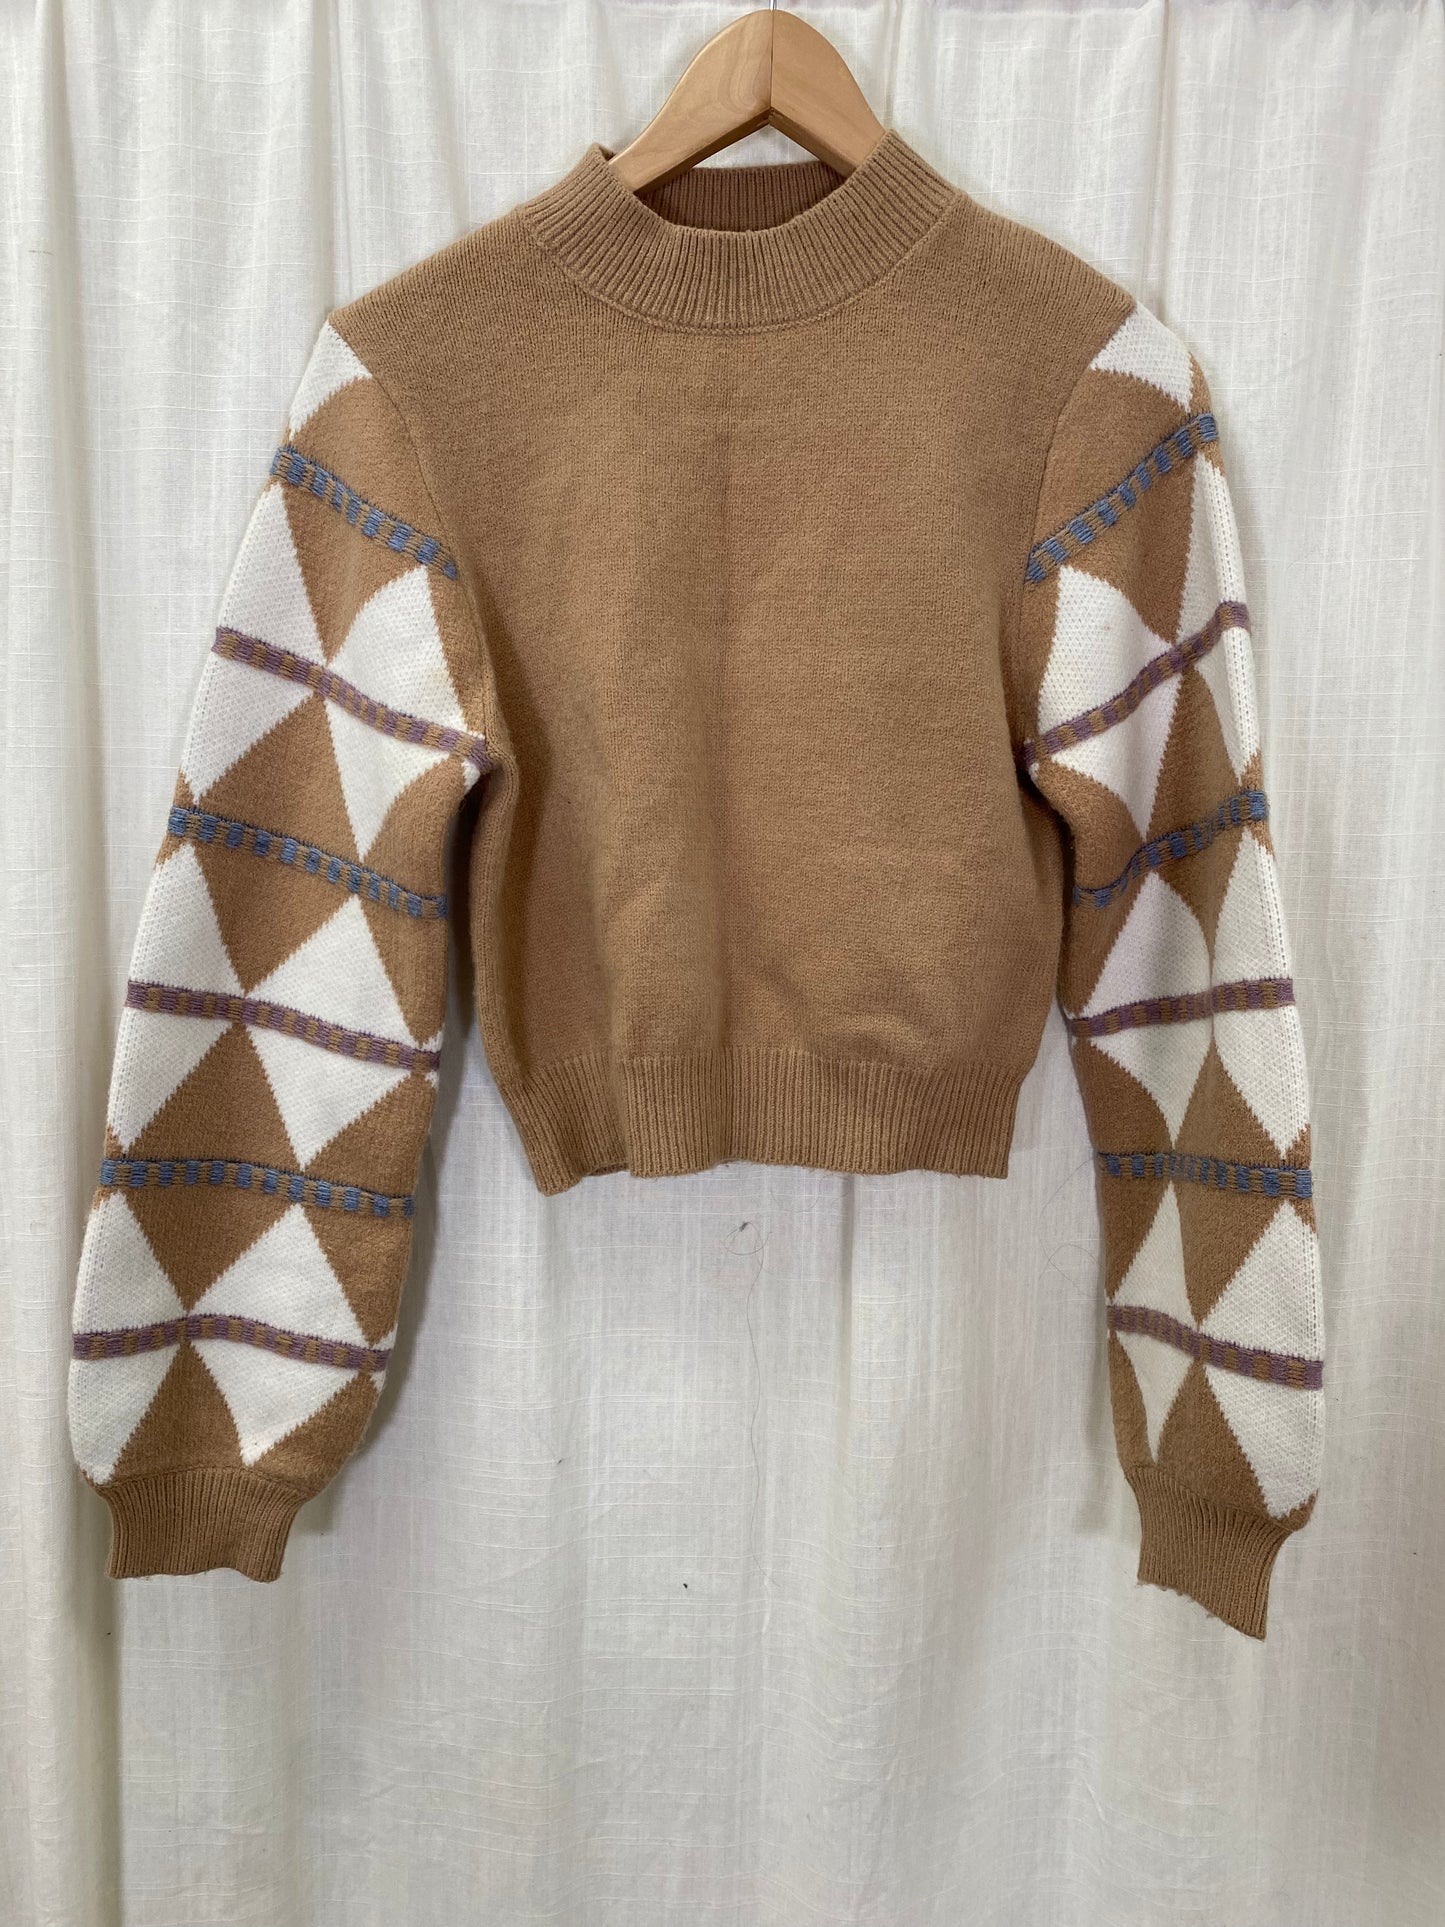 Lulus Sweater (S)